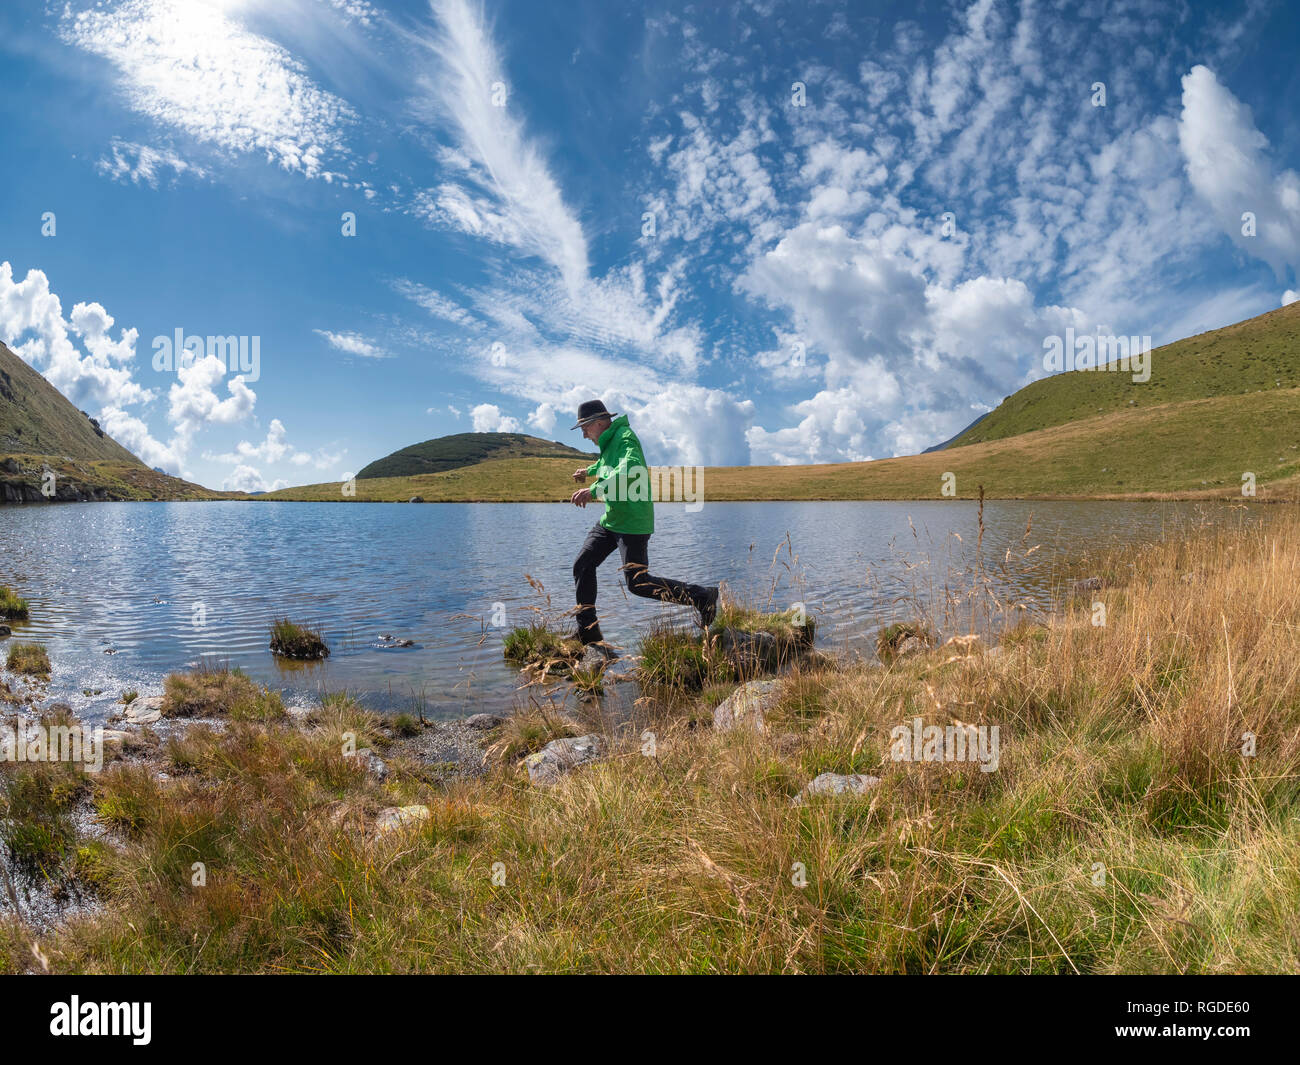 Italy, Lombardy, hiker jumping at lakeside Stock Photo